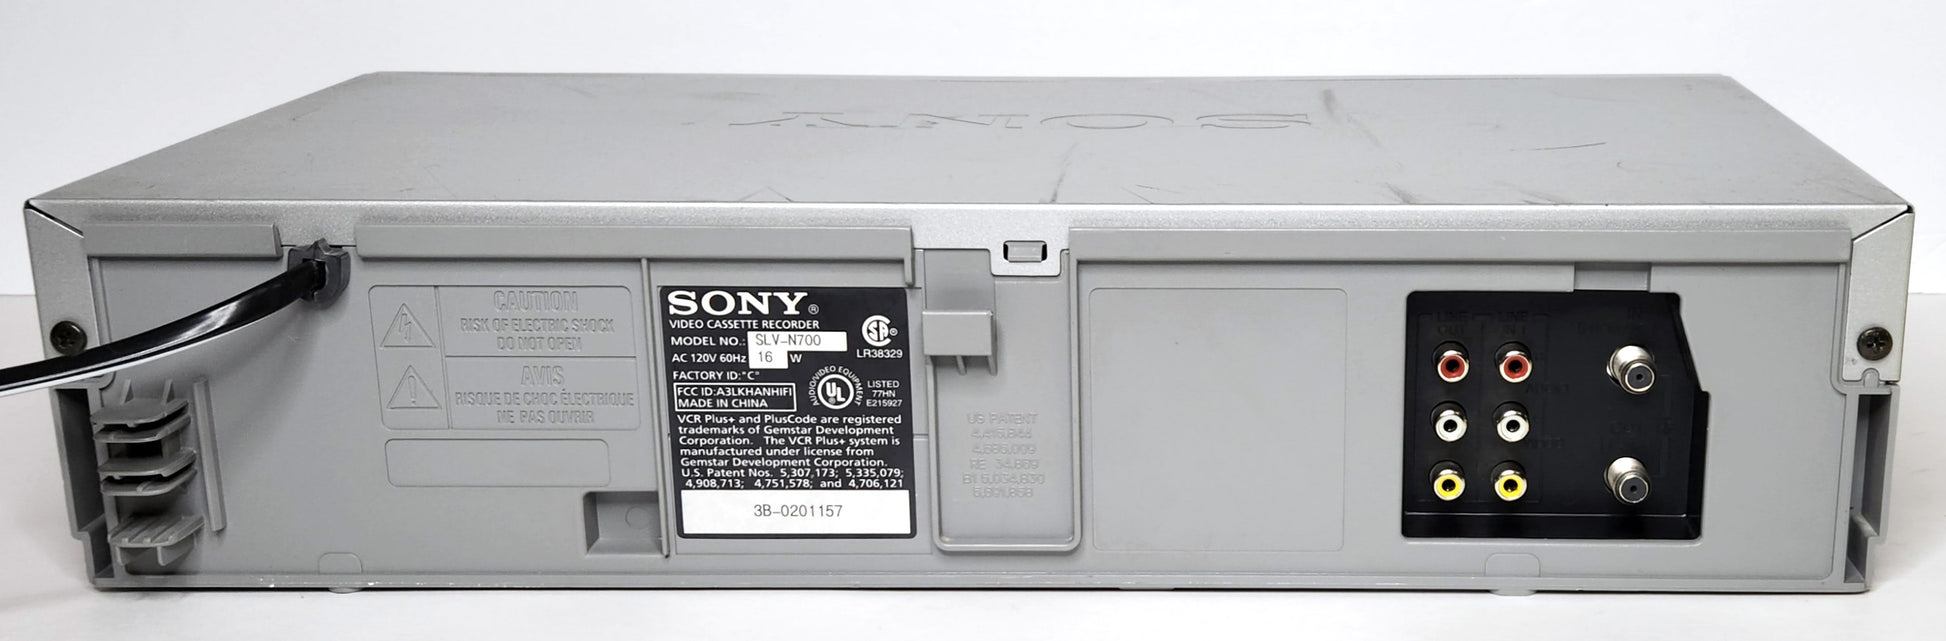 Sony SLV-N700 VCR, 4-Head Hi-Fi Stereo - Back